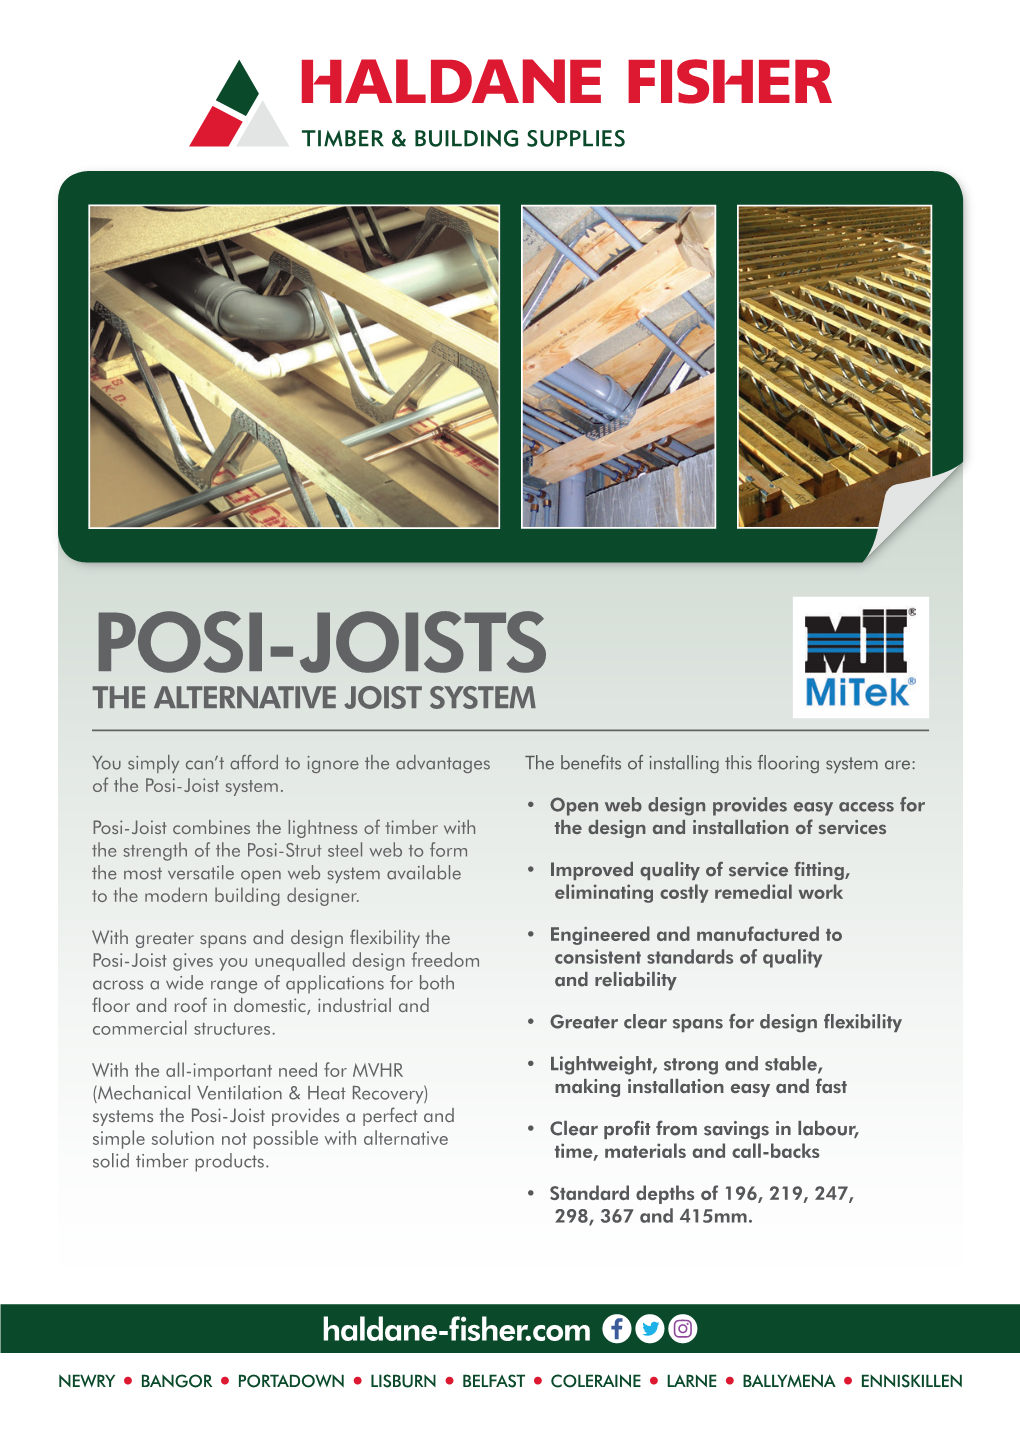 Posi-Joists the Alternative Joist System